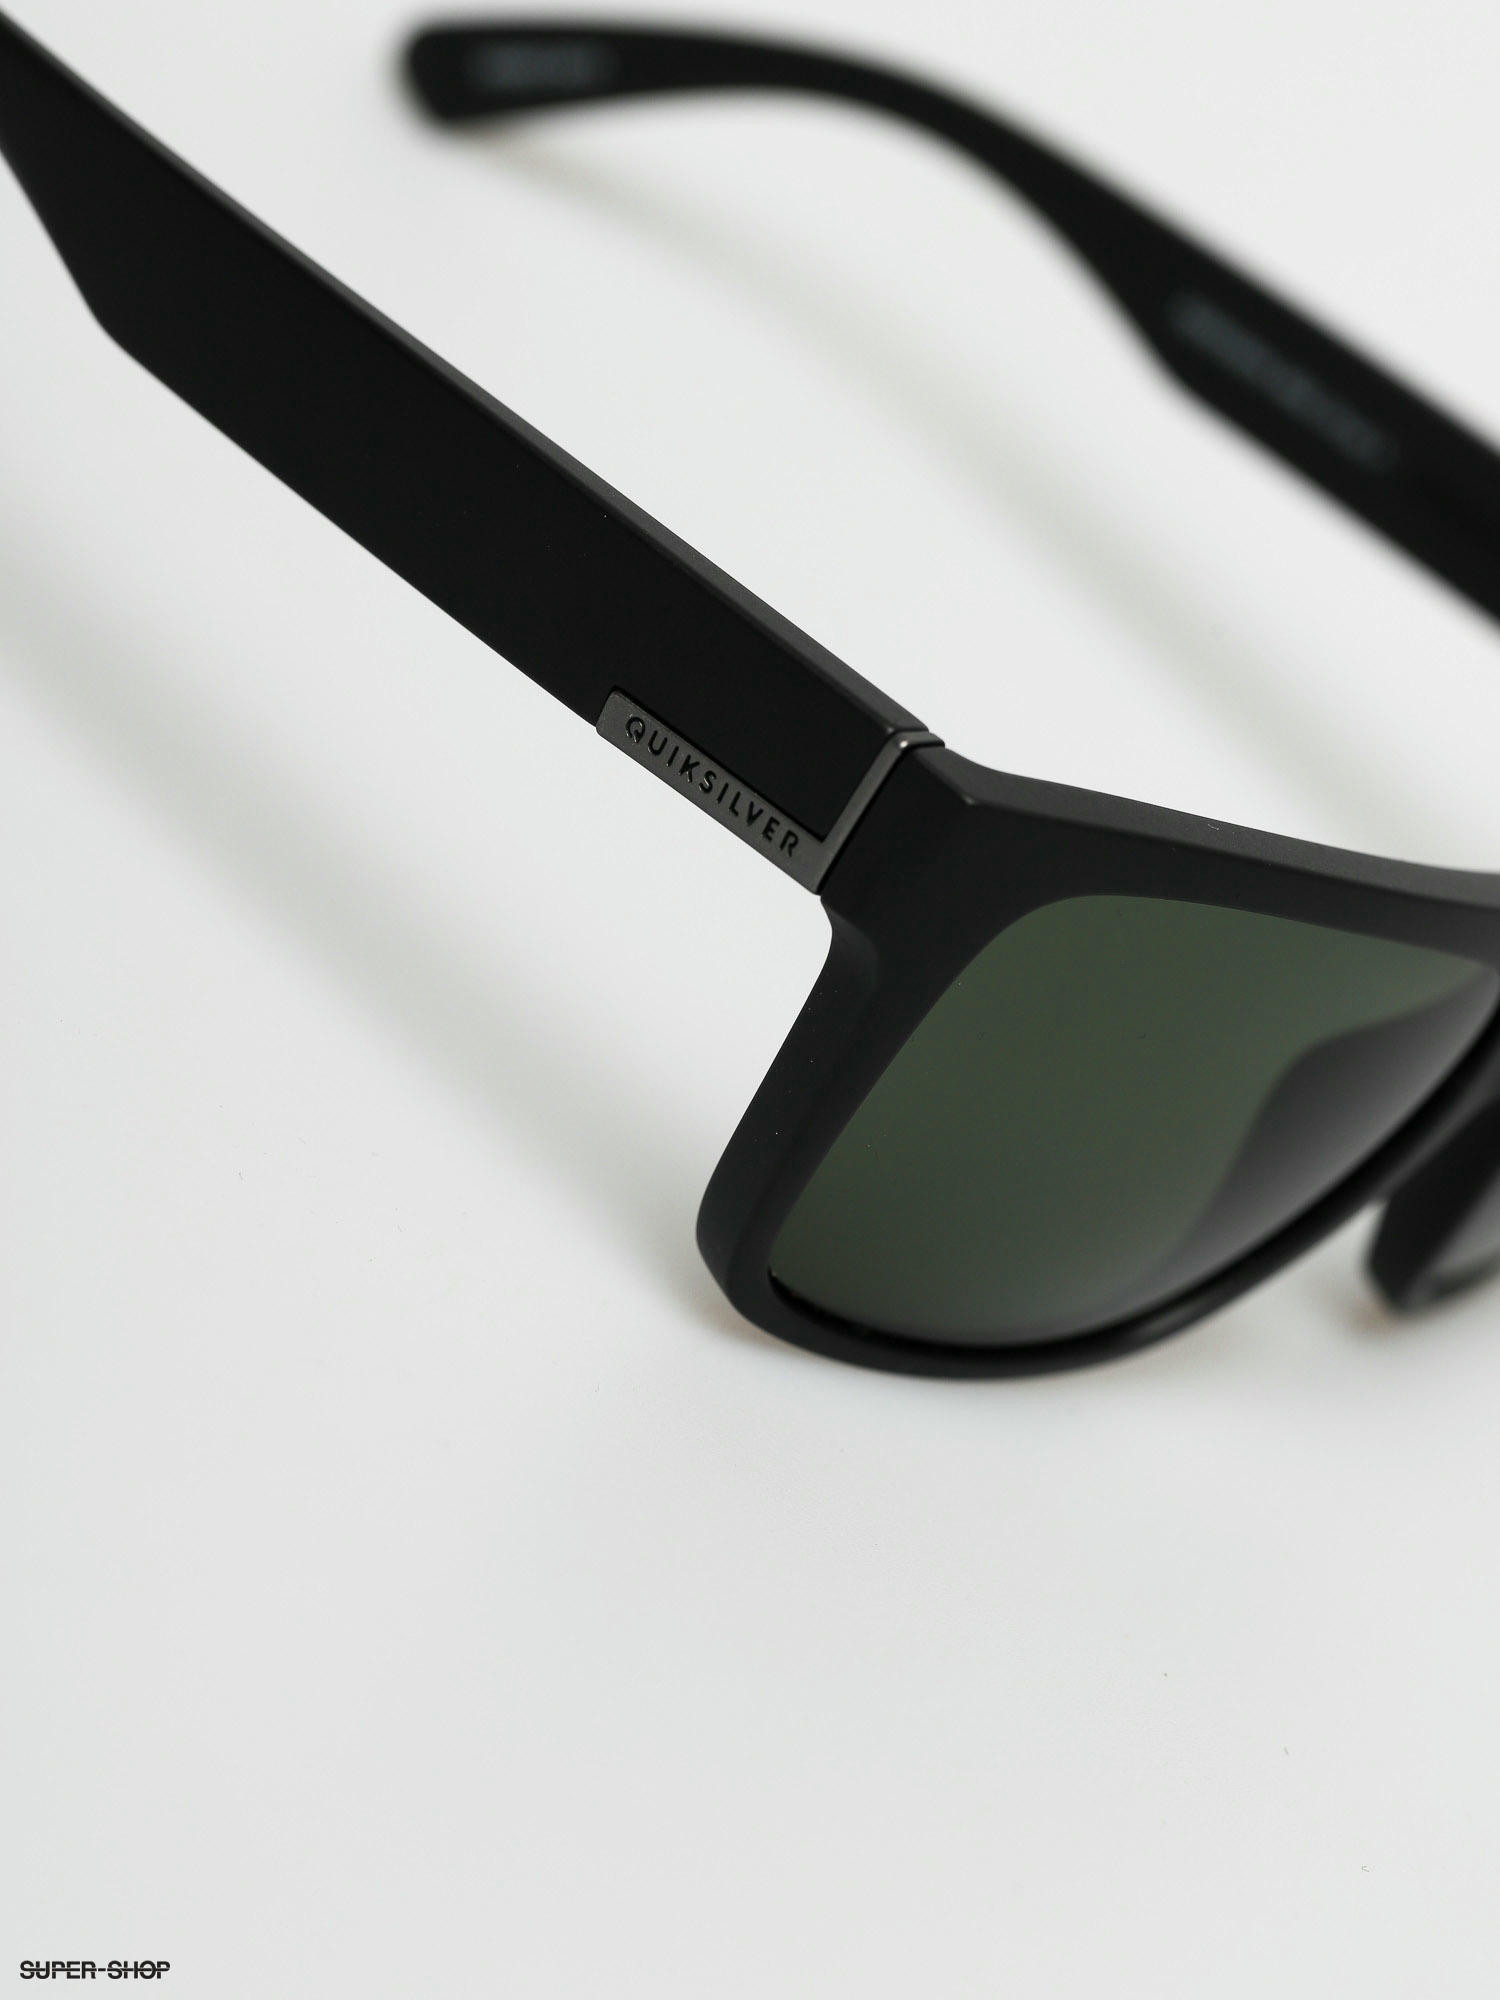 Quiksilver Bruiser Polarized Sunglasses (matte black/green p)